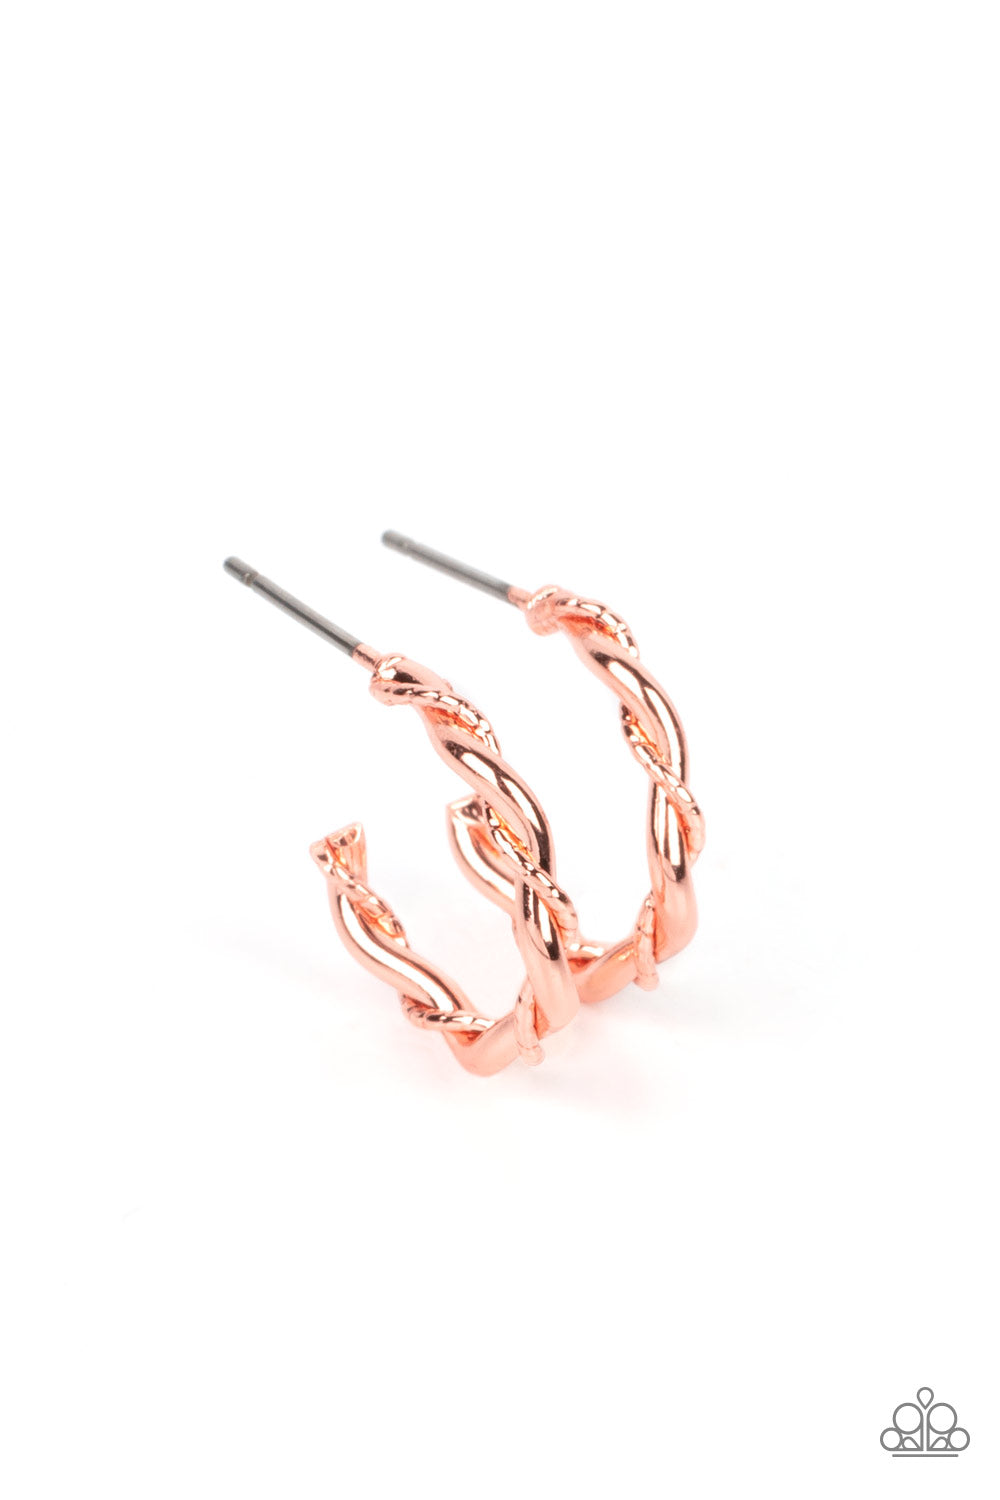 Irresistibly Intertwined Copper
Hoop Earrings